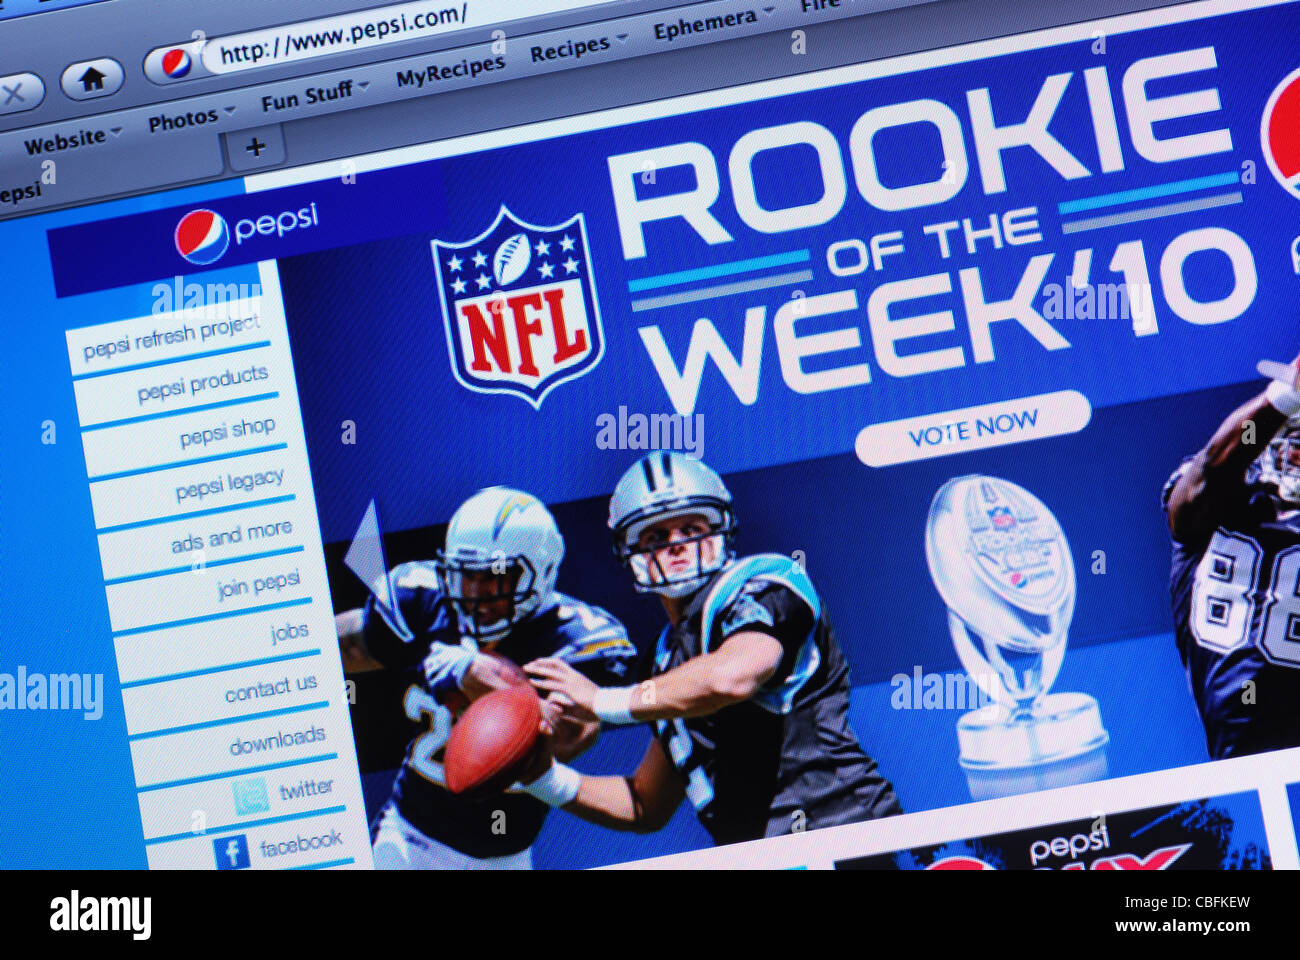 Pepsi Cola Website Startseite Werbung Super Bowl Stockfoto